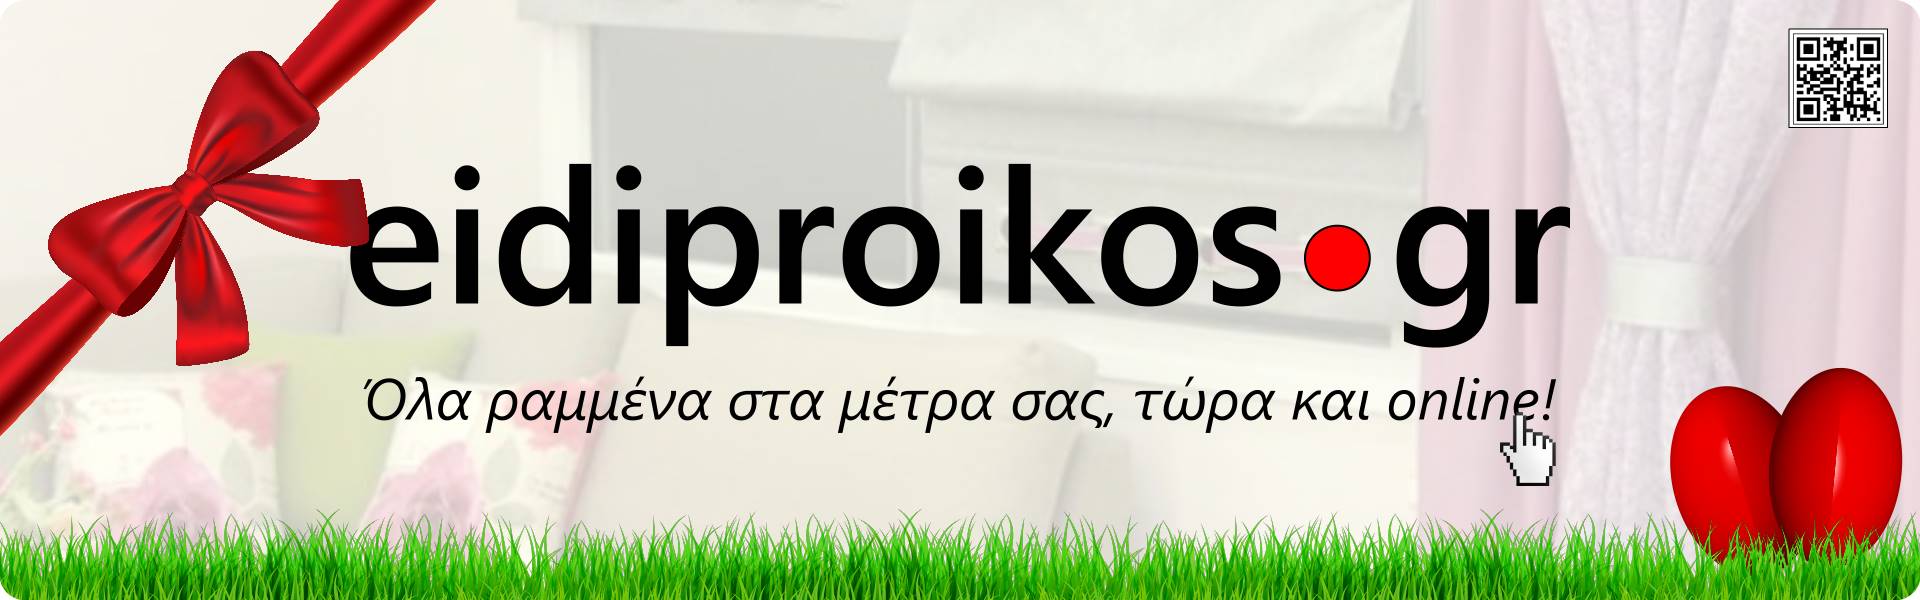 Eidiproikos.gr